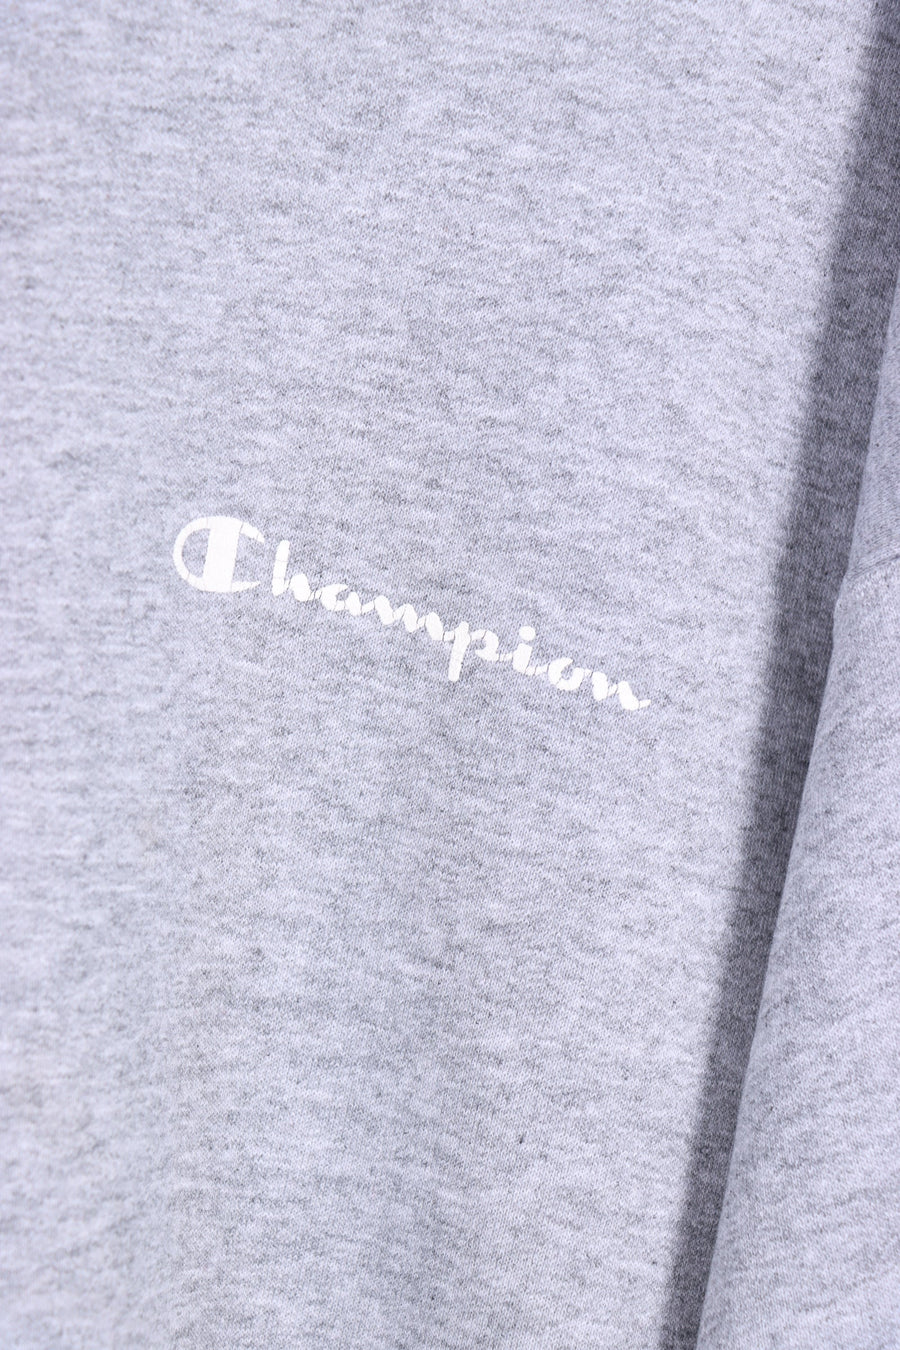 CHAMPION Spell Out Logo Grey Sweatshirt (XL)